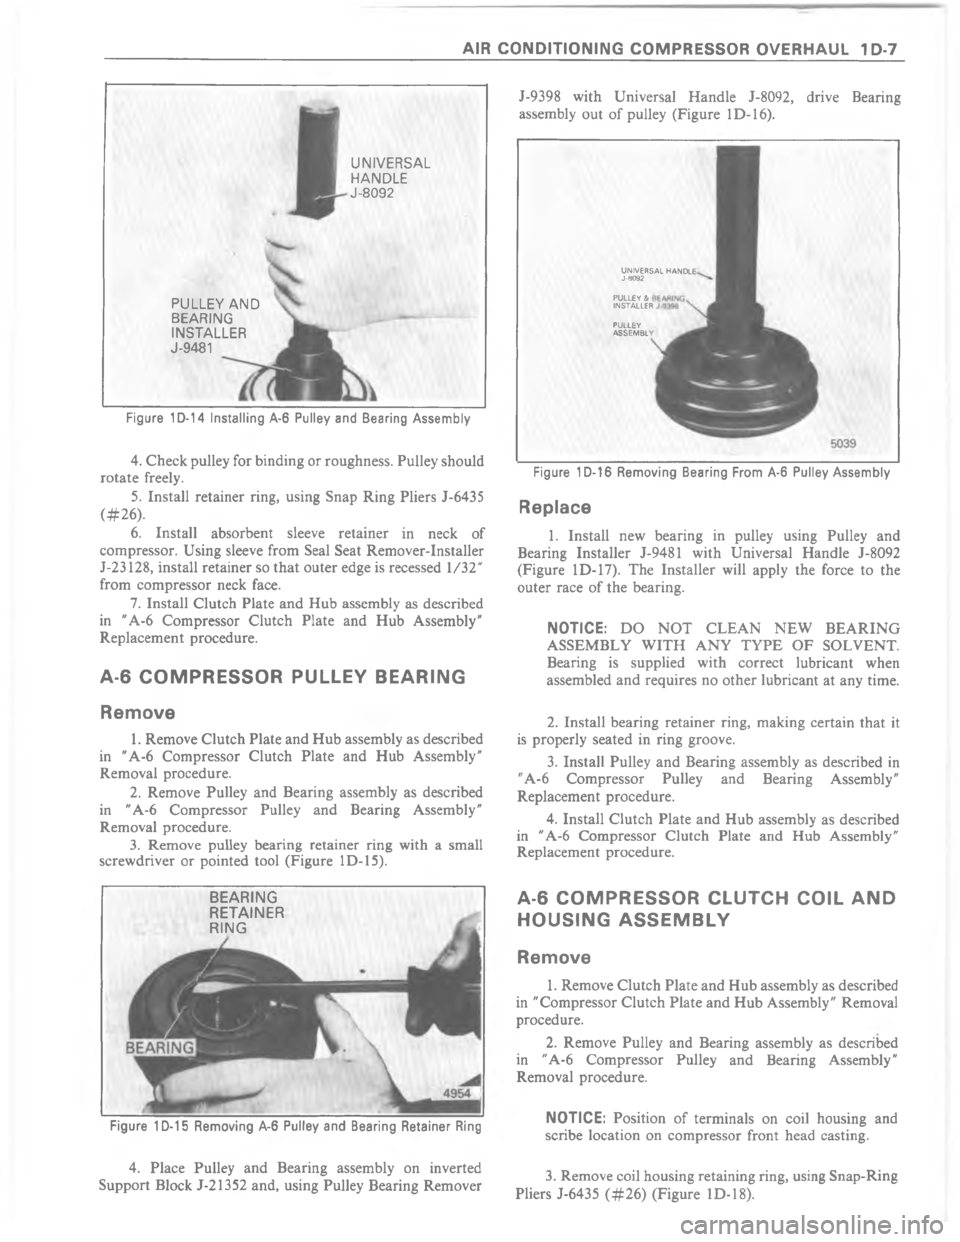 CHEVROLET LIGHT DUTY TRUCK 1980  Repair Everhaul Manual Downloaded from www.Manualslib.com manuals search engine  	   A         


L

LF

!$7
>

:
?
6

F

;
	
\)


8
	
\)
7
	
